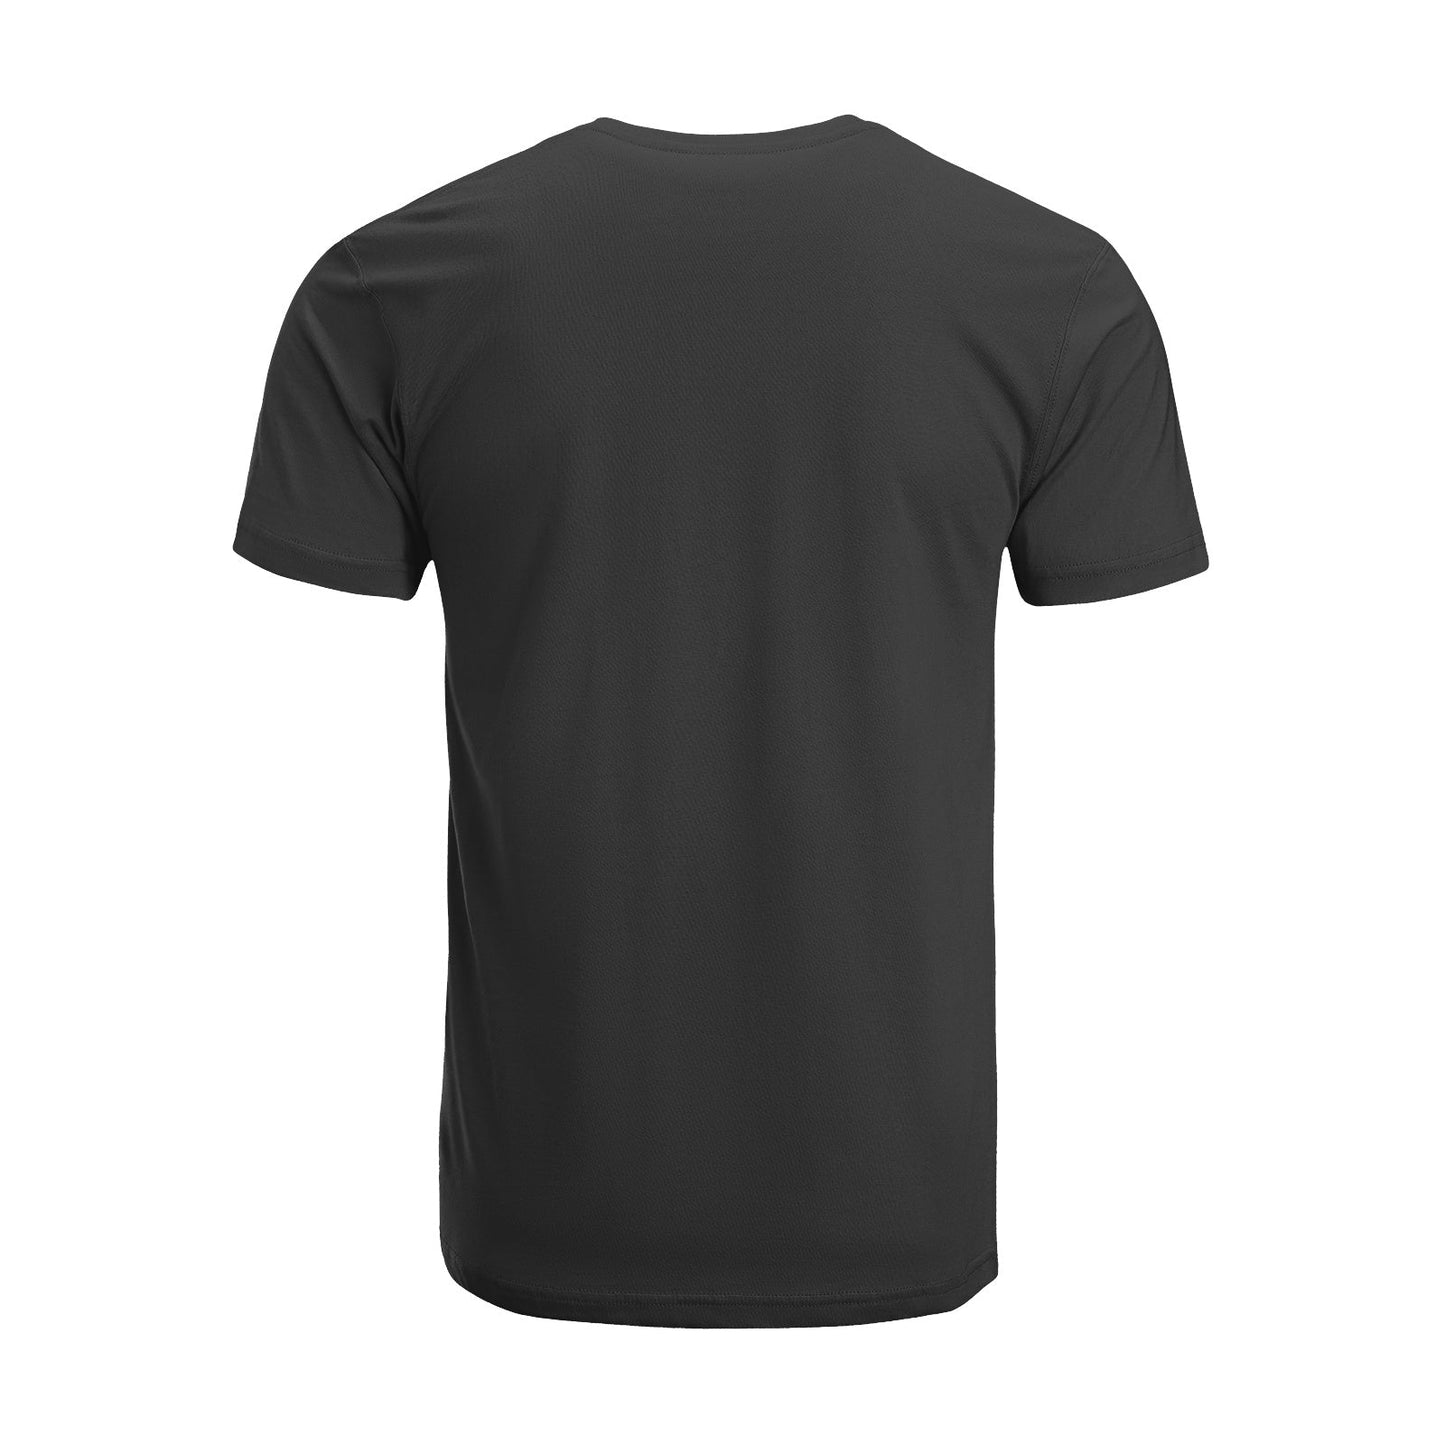 Unisex Short Sleeve Crew Neck Cotton Jersey T-Shirt Gym No. 49 - Tara-Outfits.com